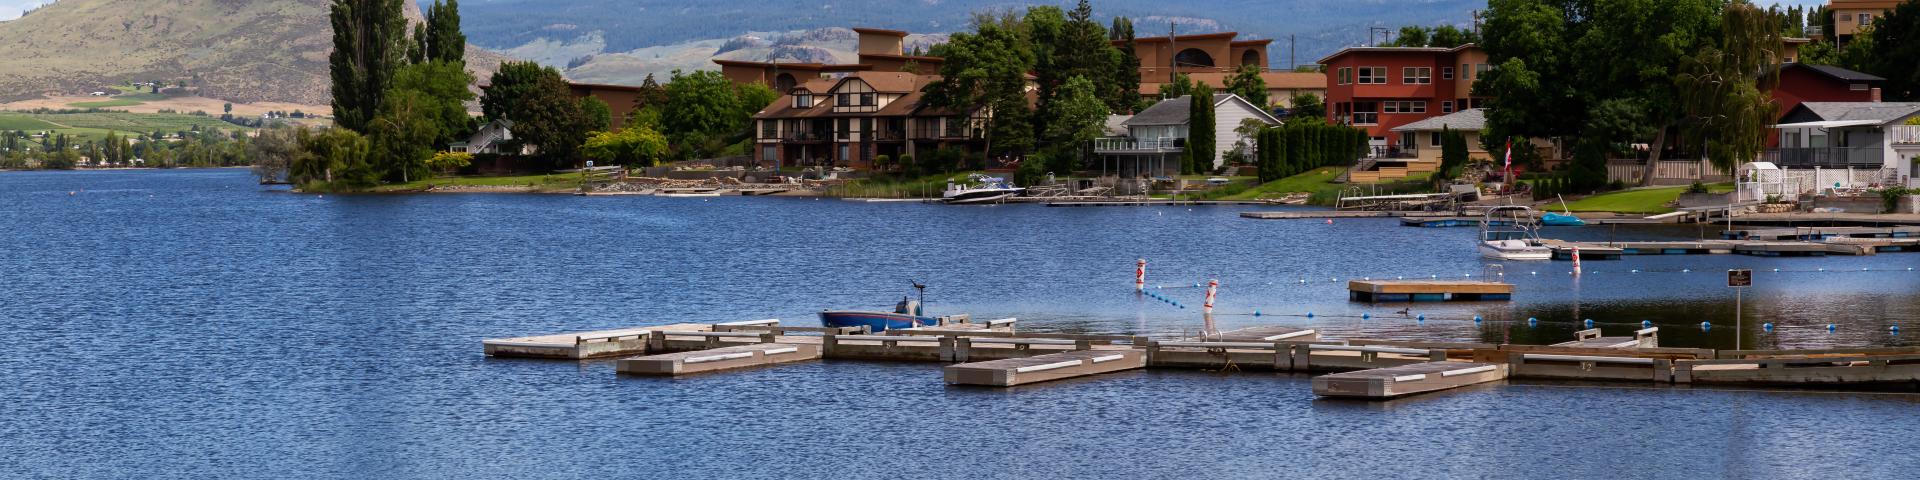 Image of wooden docks on Osoyoos Lake, British Columbia